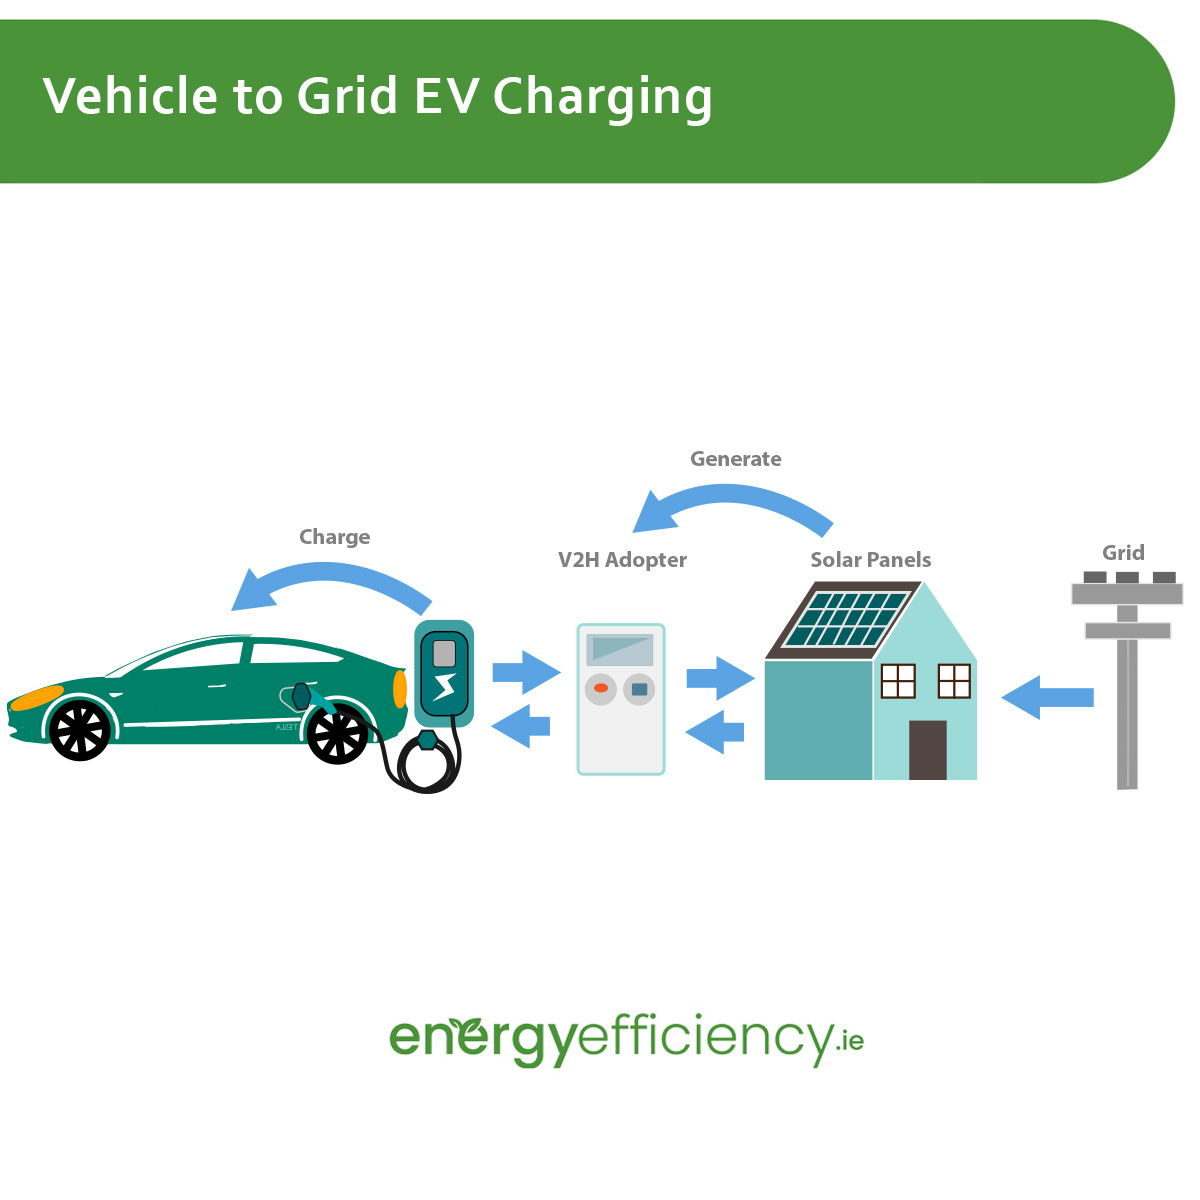 Vehicle to Grid EV Charging